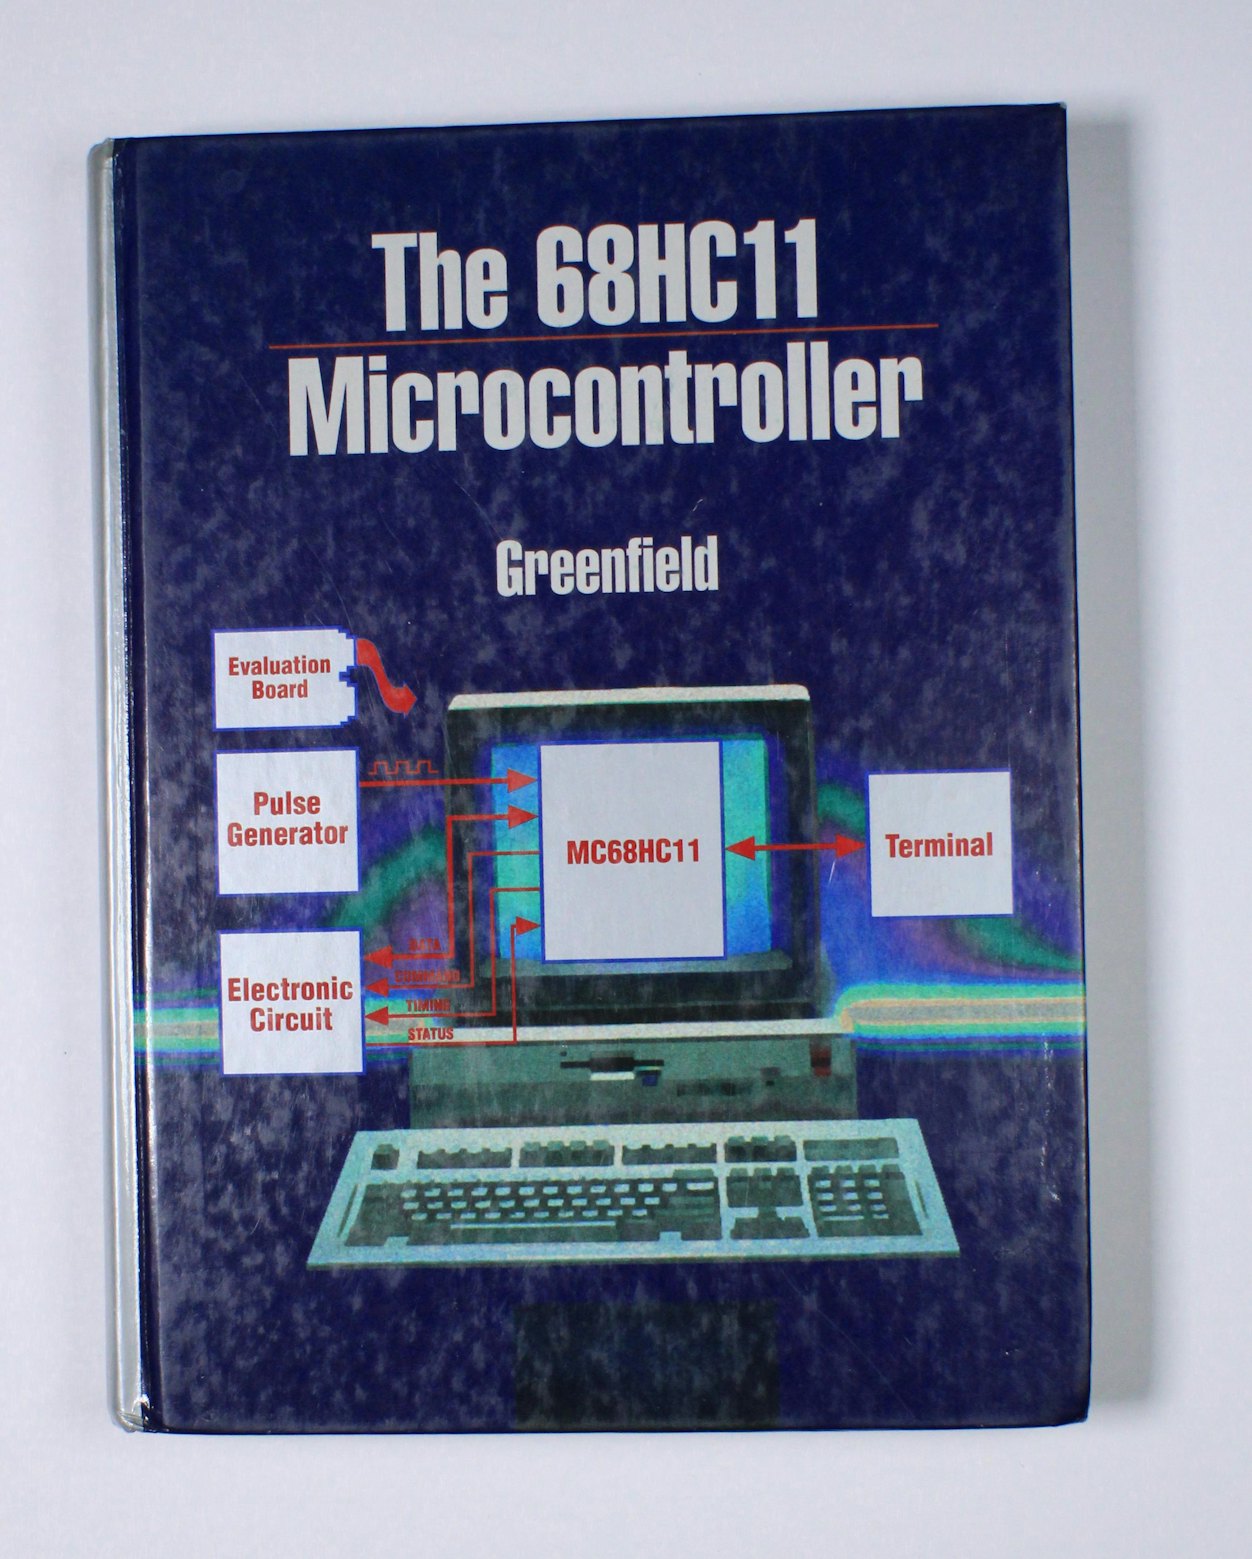 The 68HC11 Microcontroller